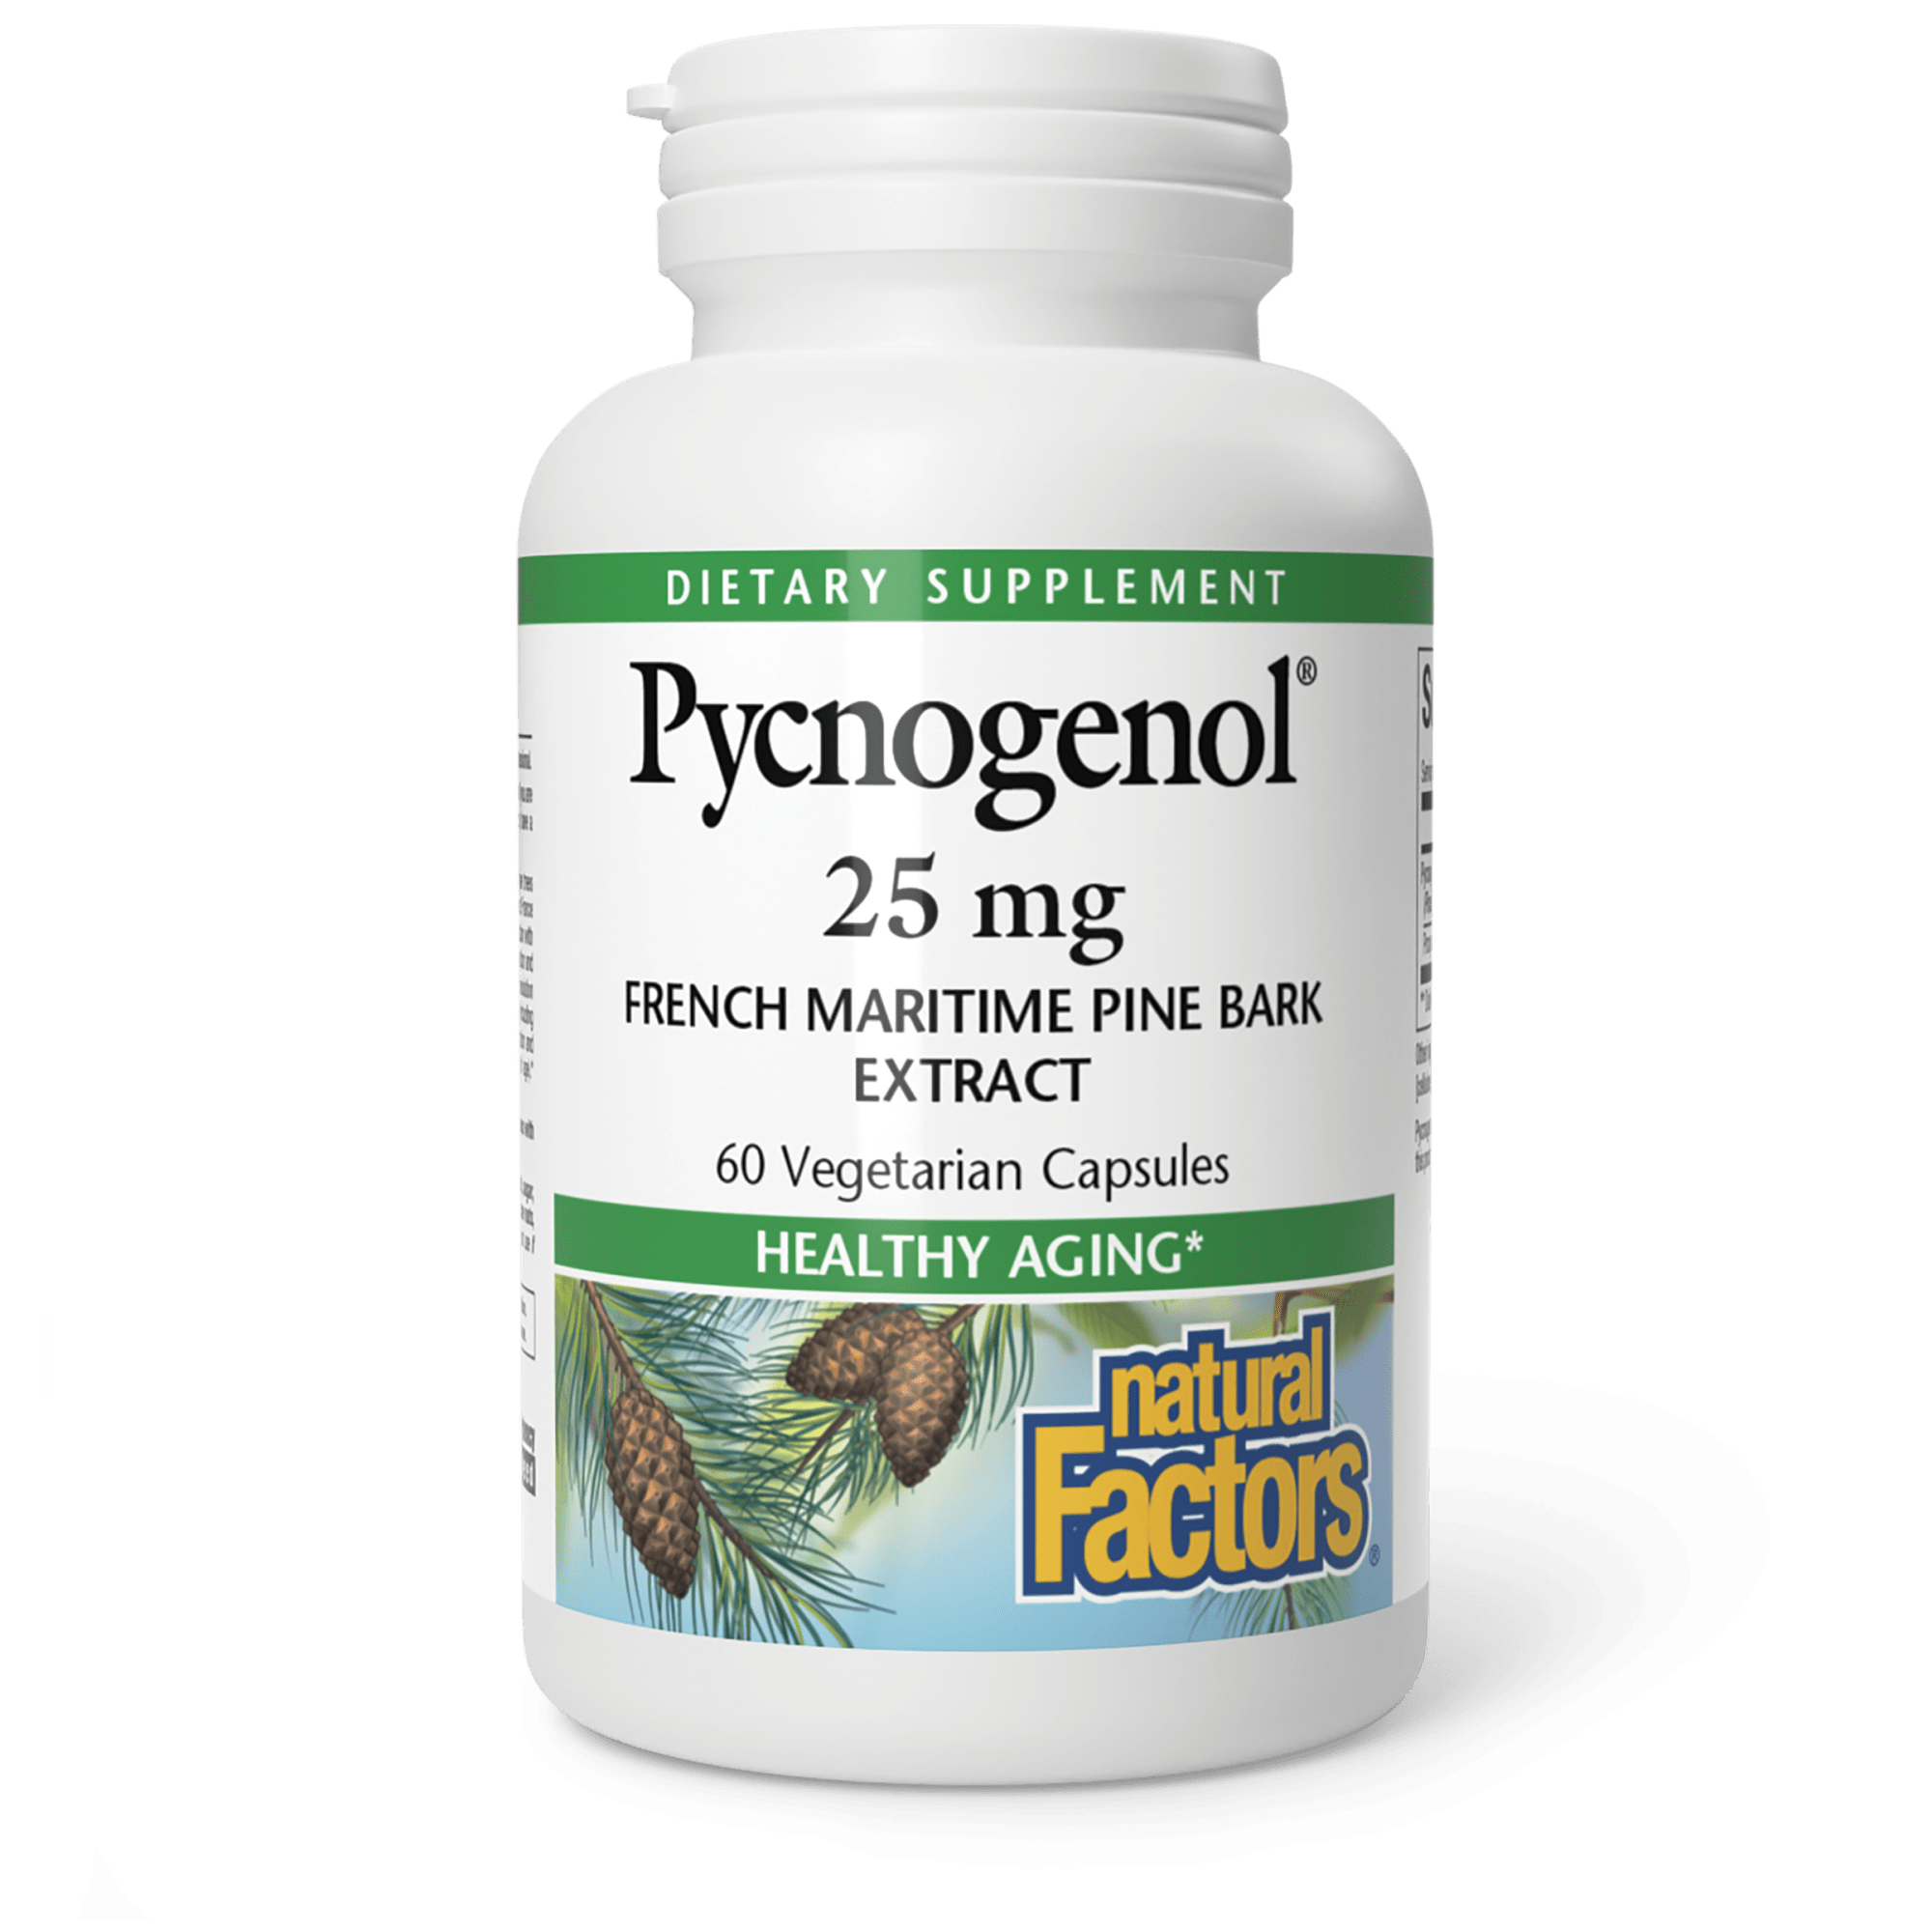 Pycnogenol supplements